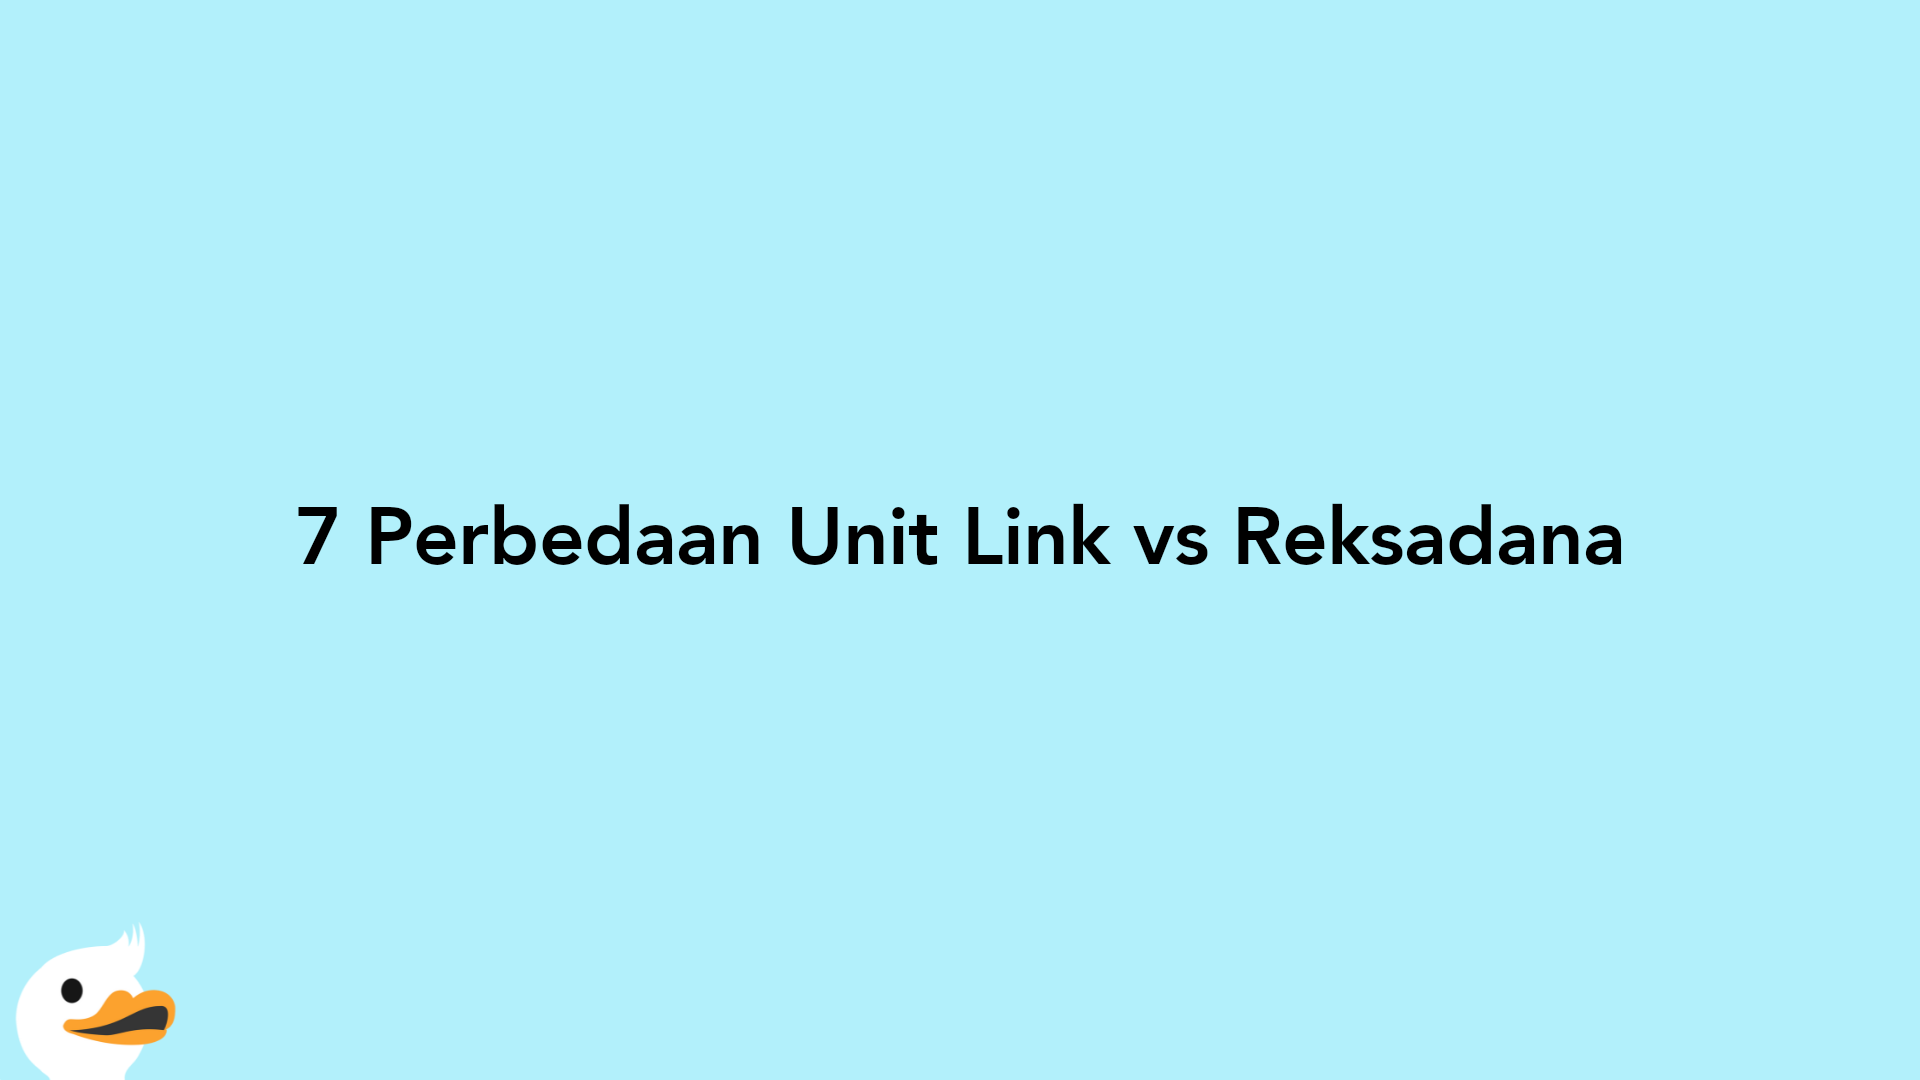 7 Perbedaan Unit Link vs Reksadana